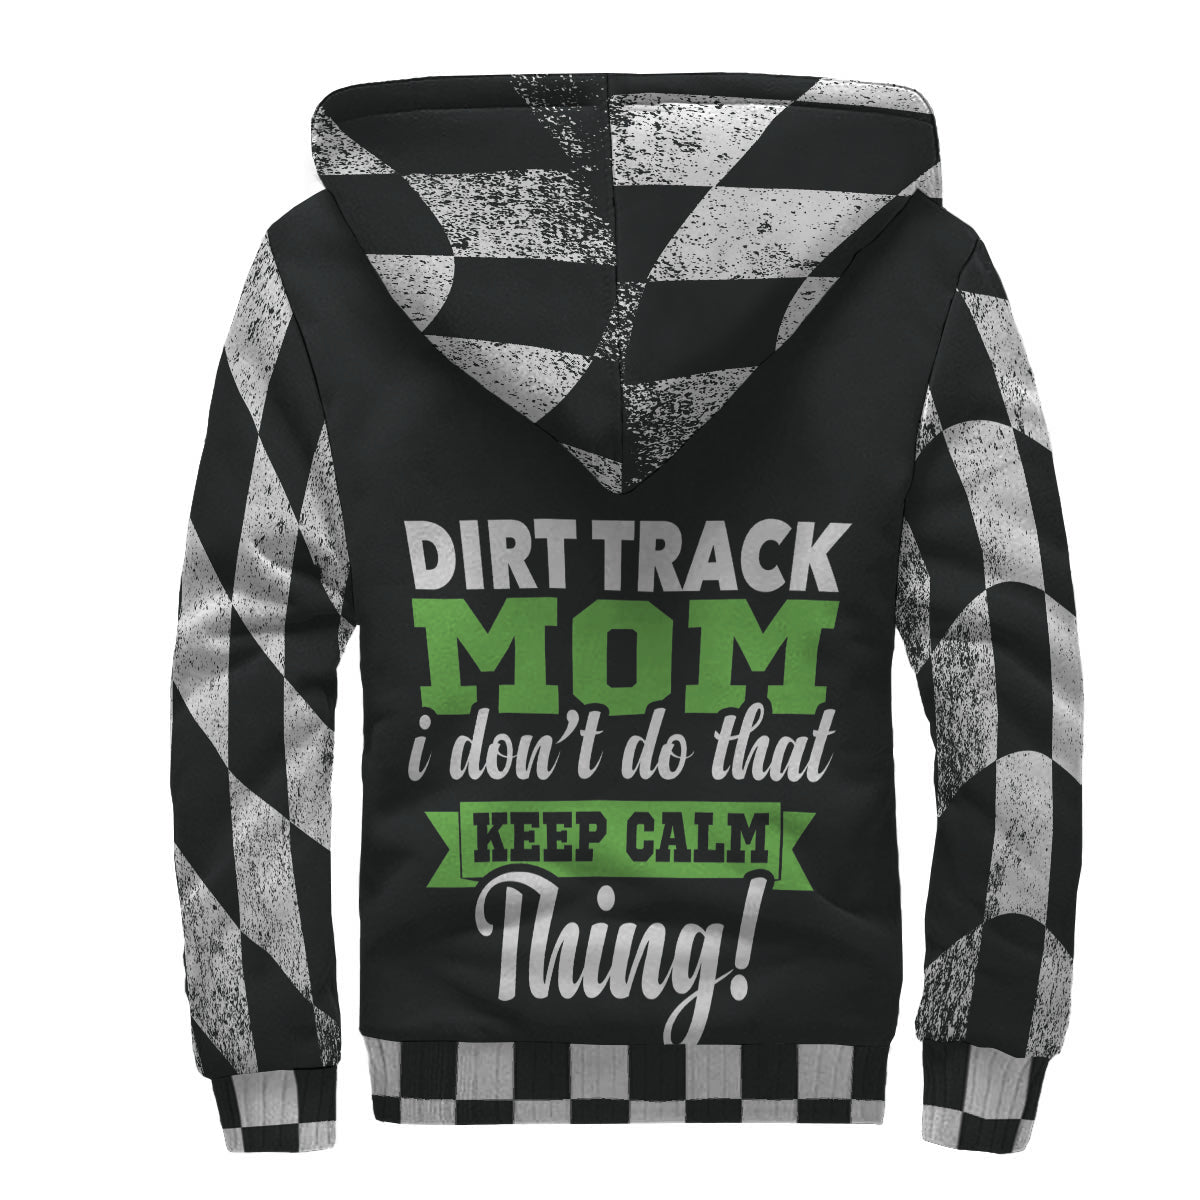 dirt track racing mom jacket